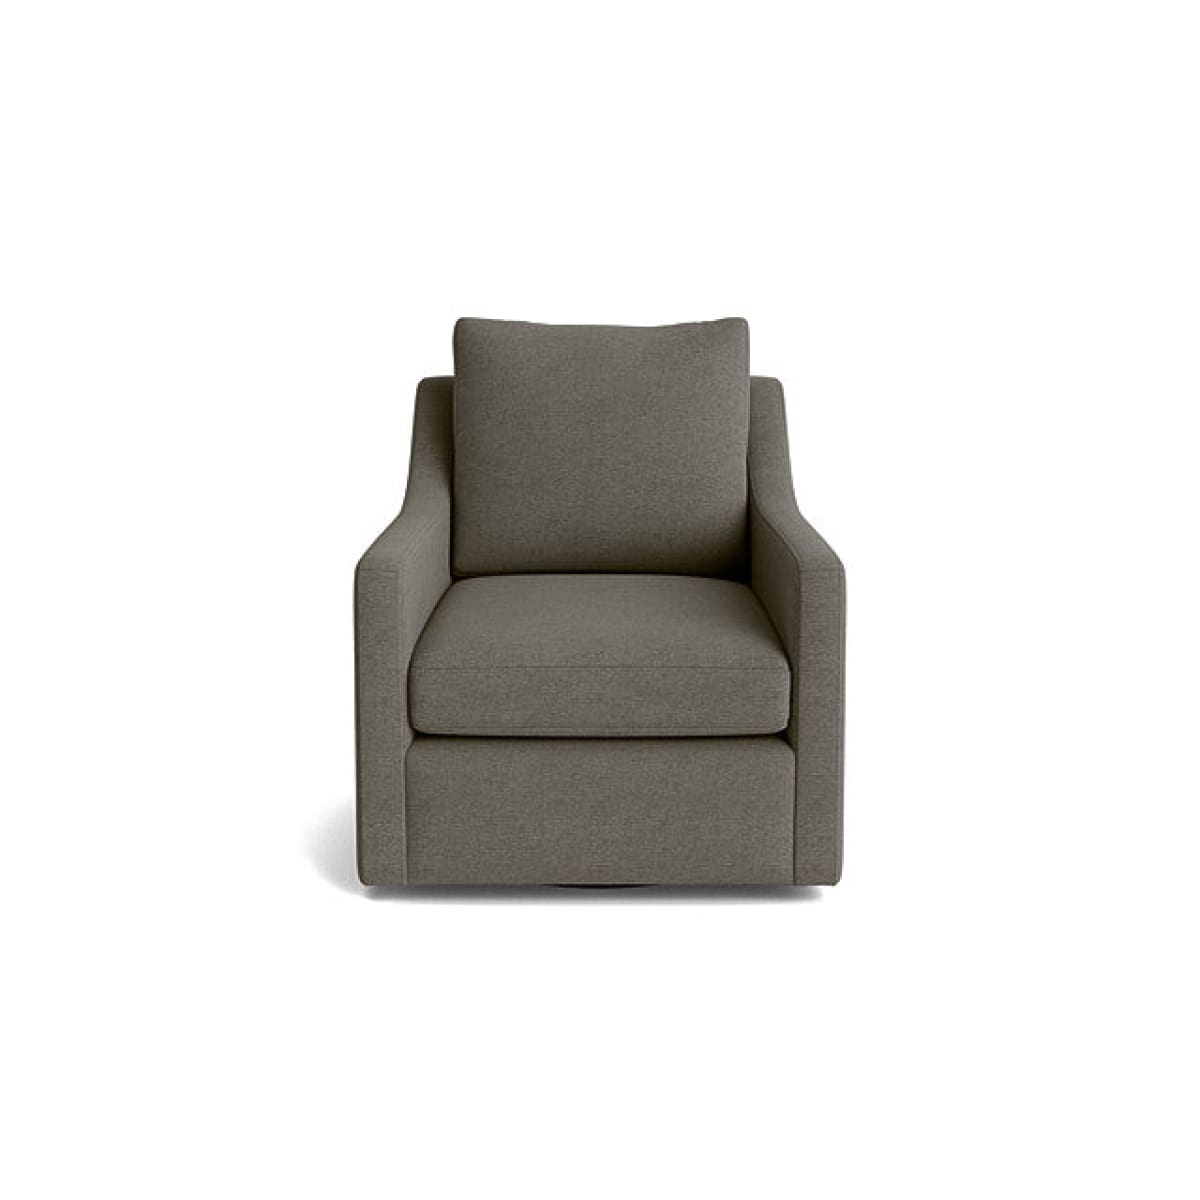 Grove Accent Chair - Entice Mist